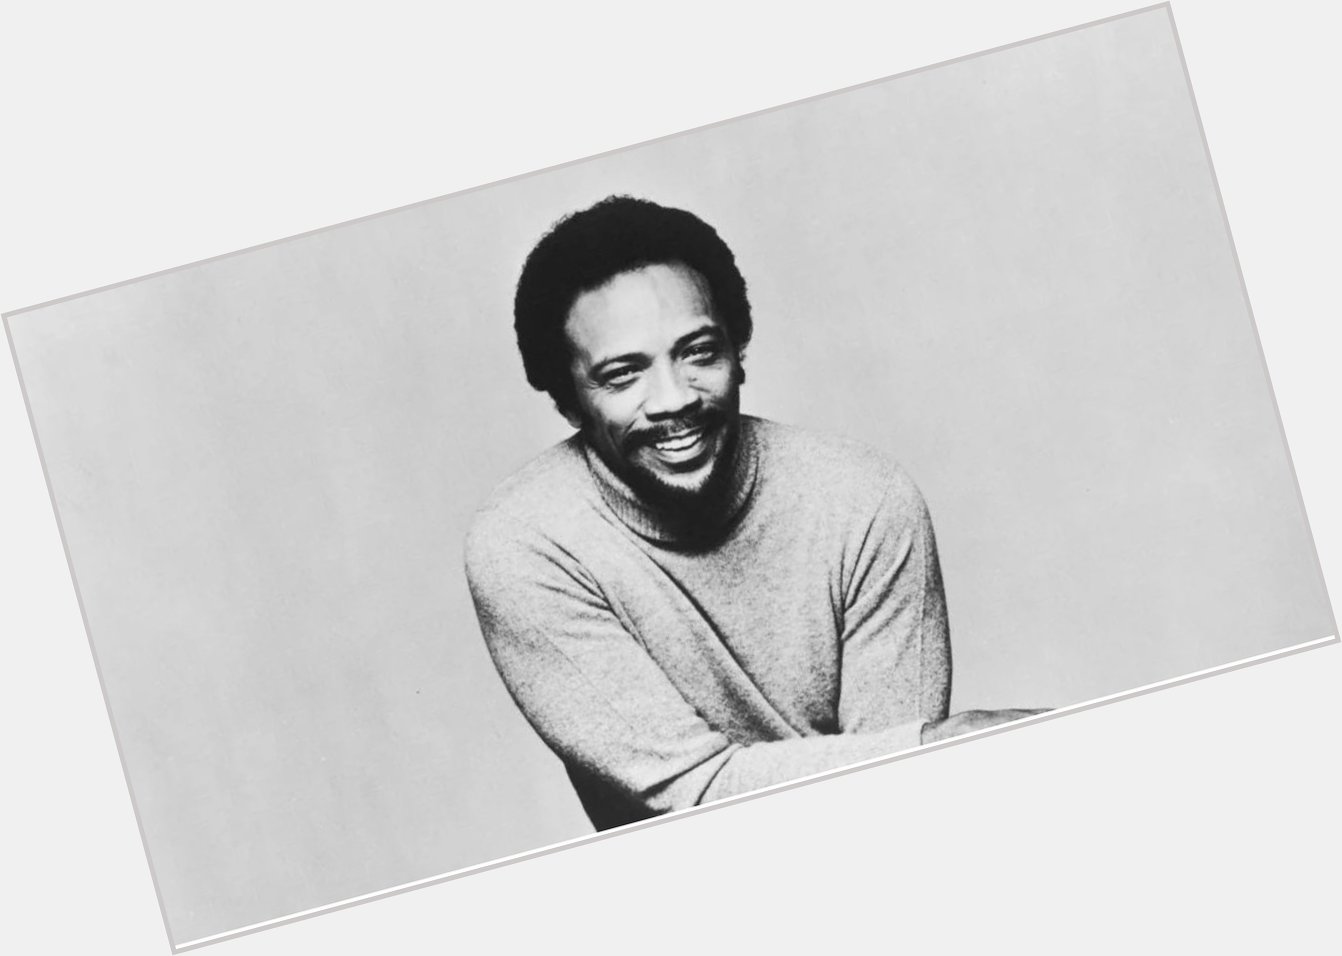 Happy Birthday to the living legend Quincy Jones! 